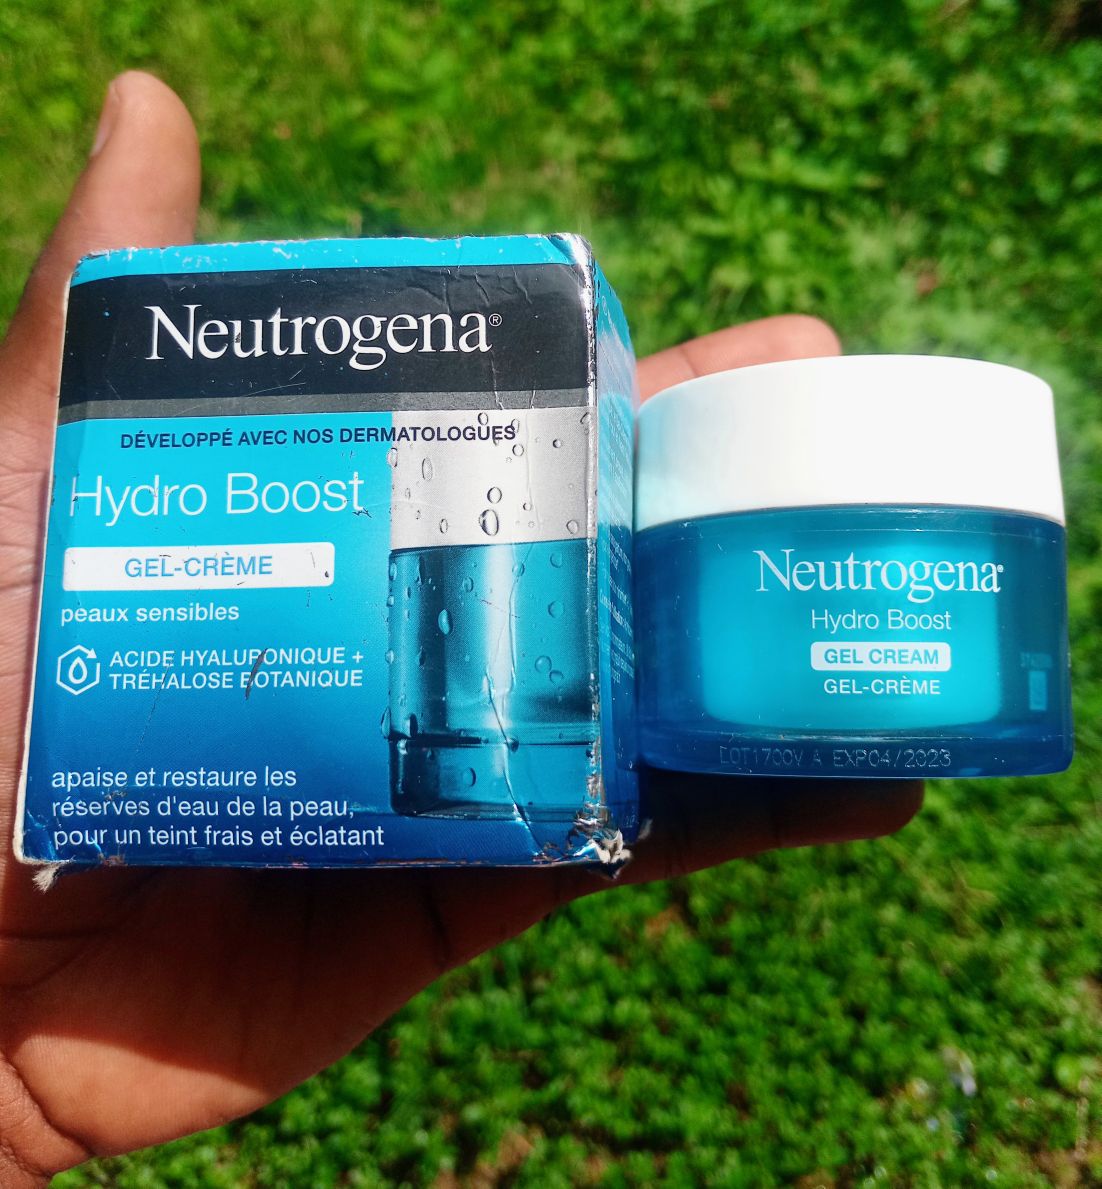 Neutrogena Hydro Boost Gel-Cream review